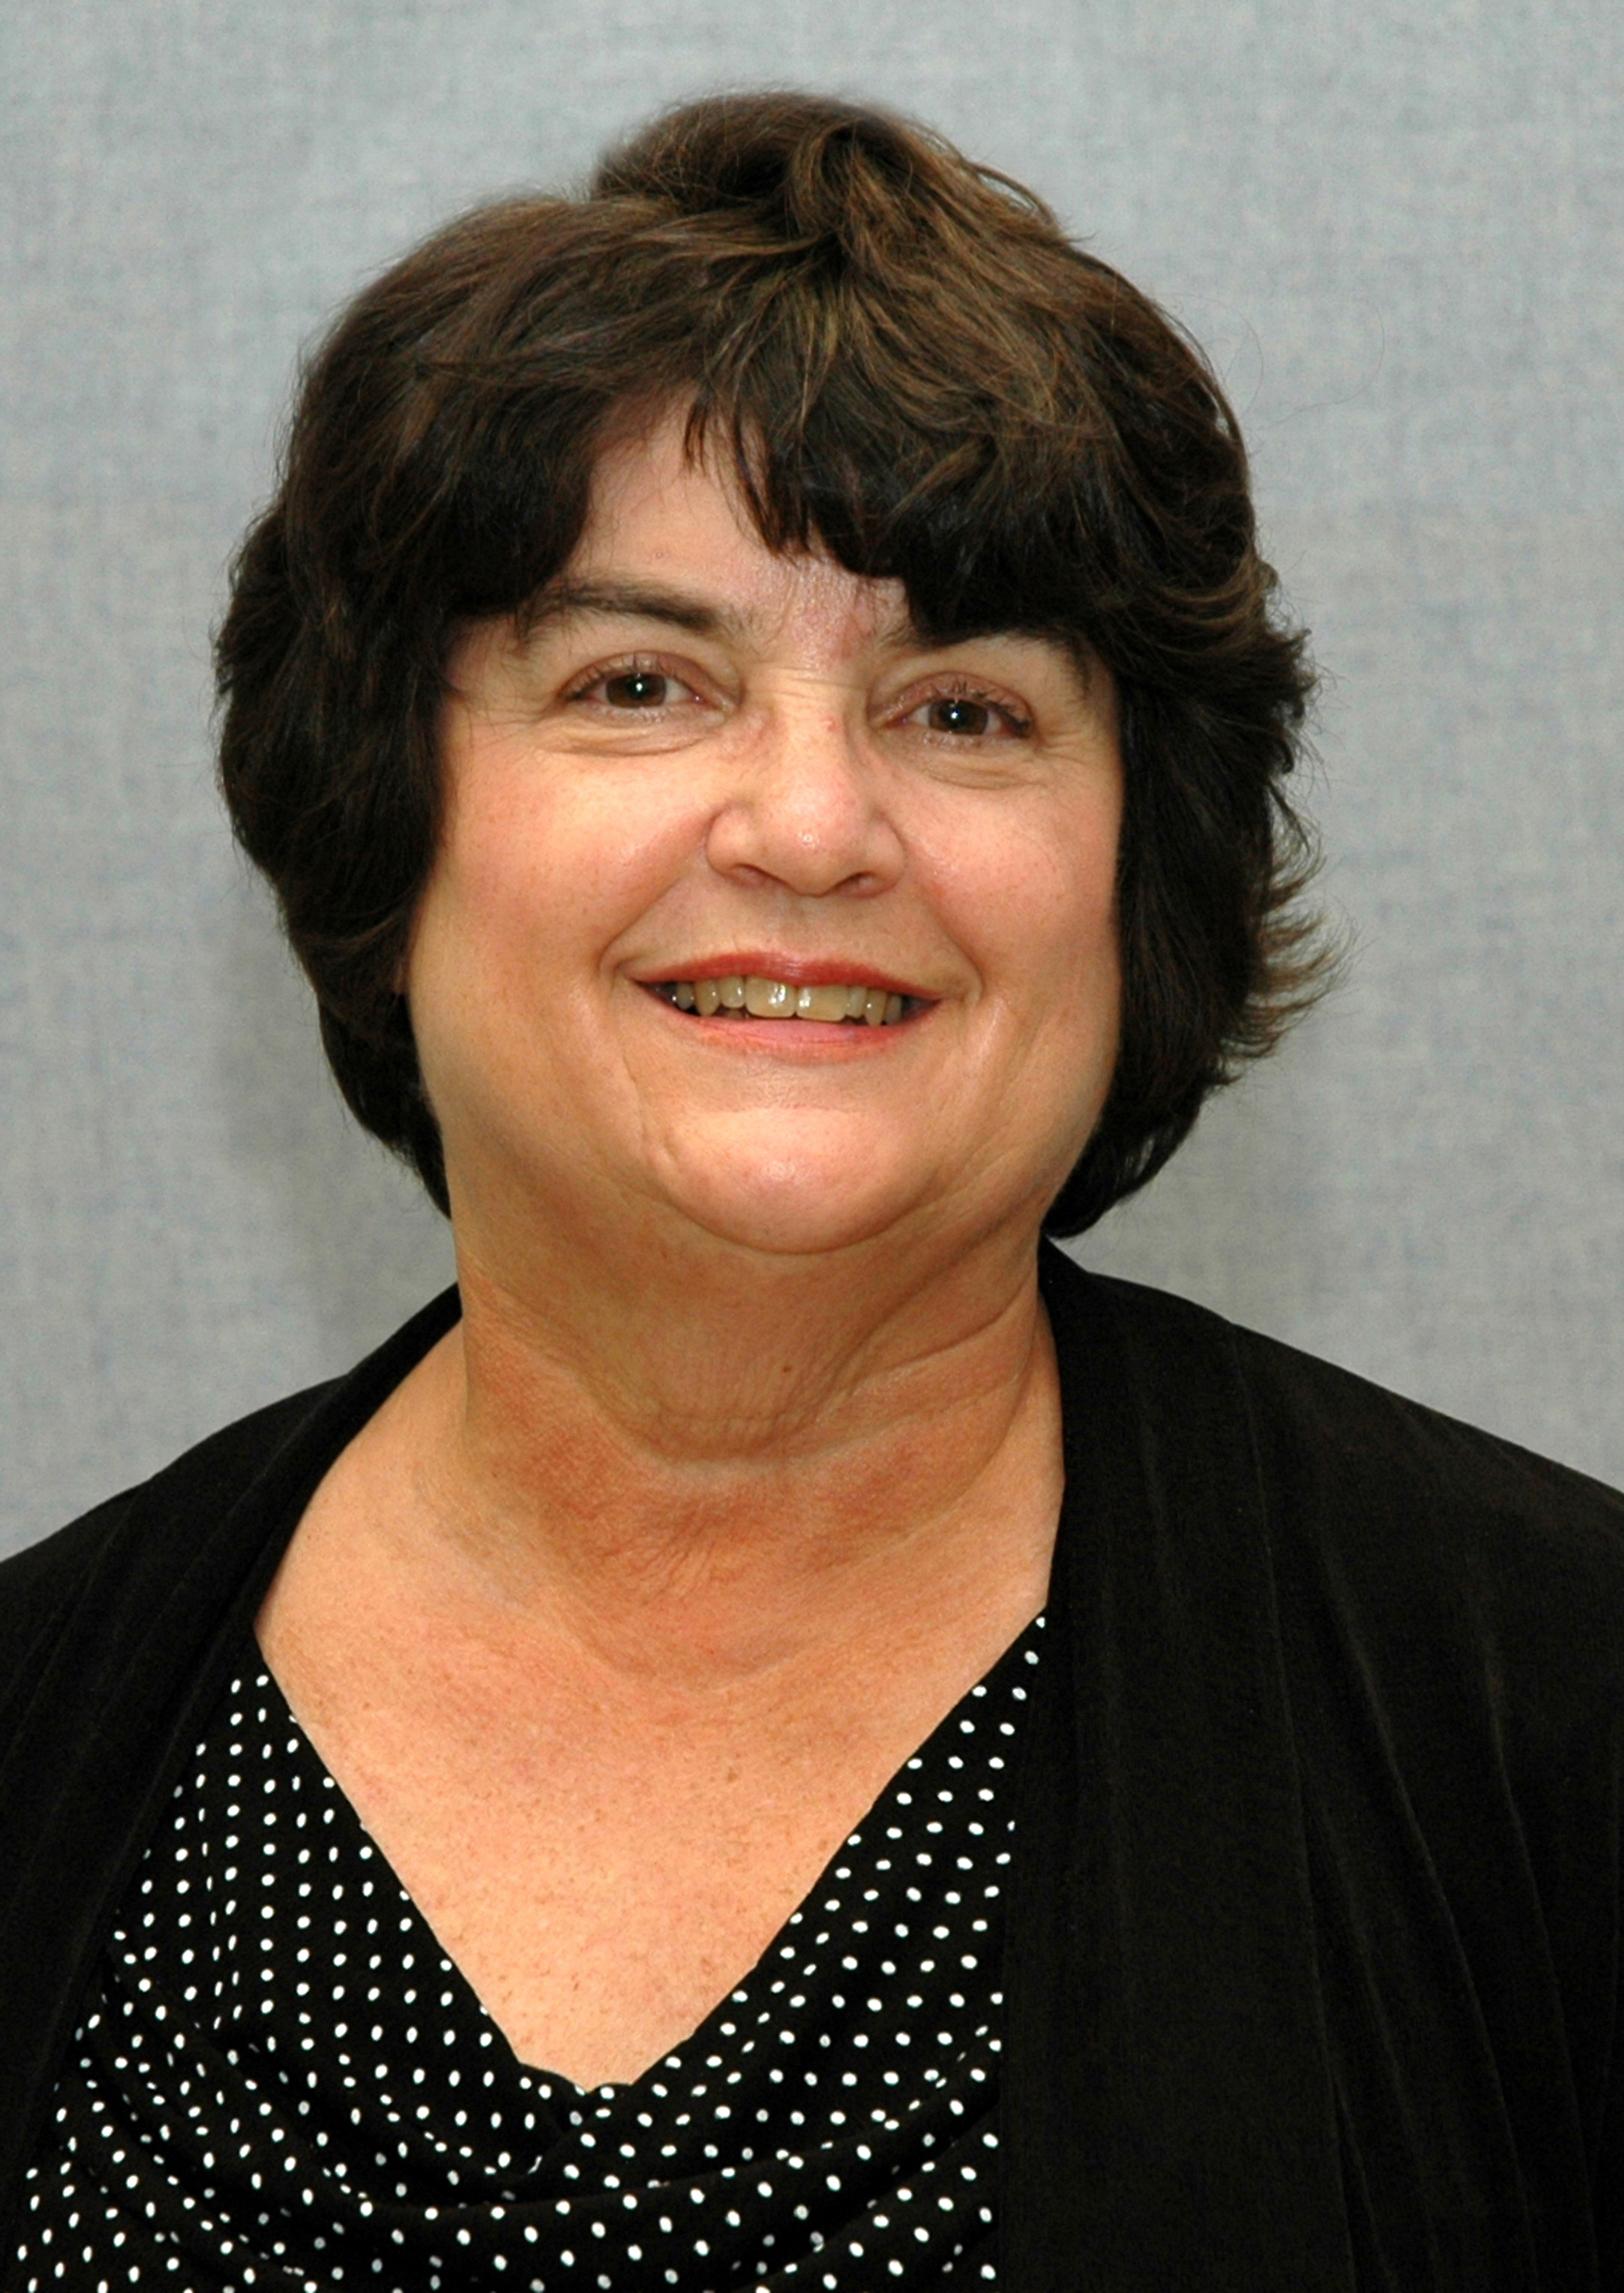 Board member Sue Brown